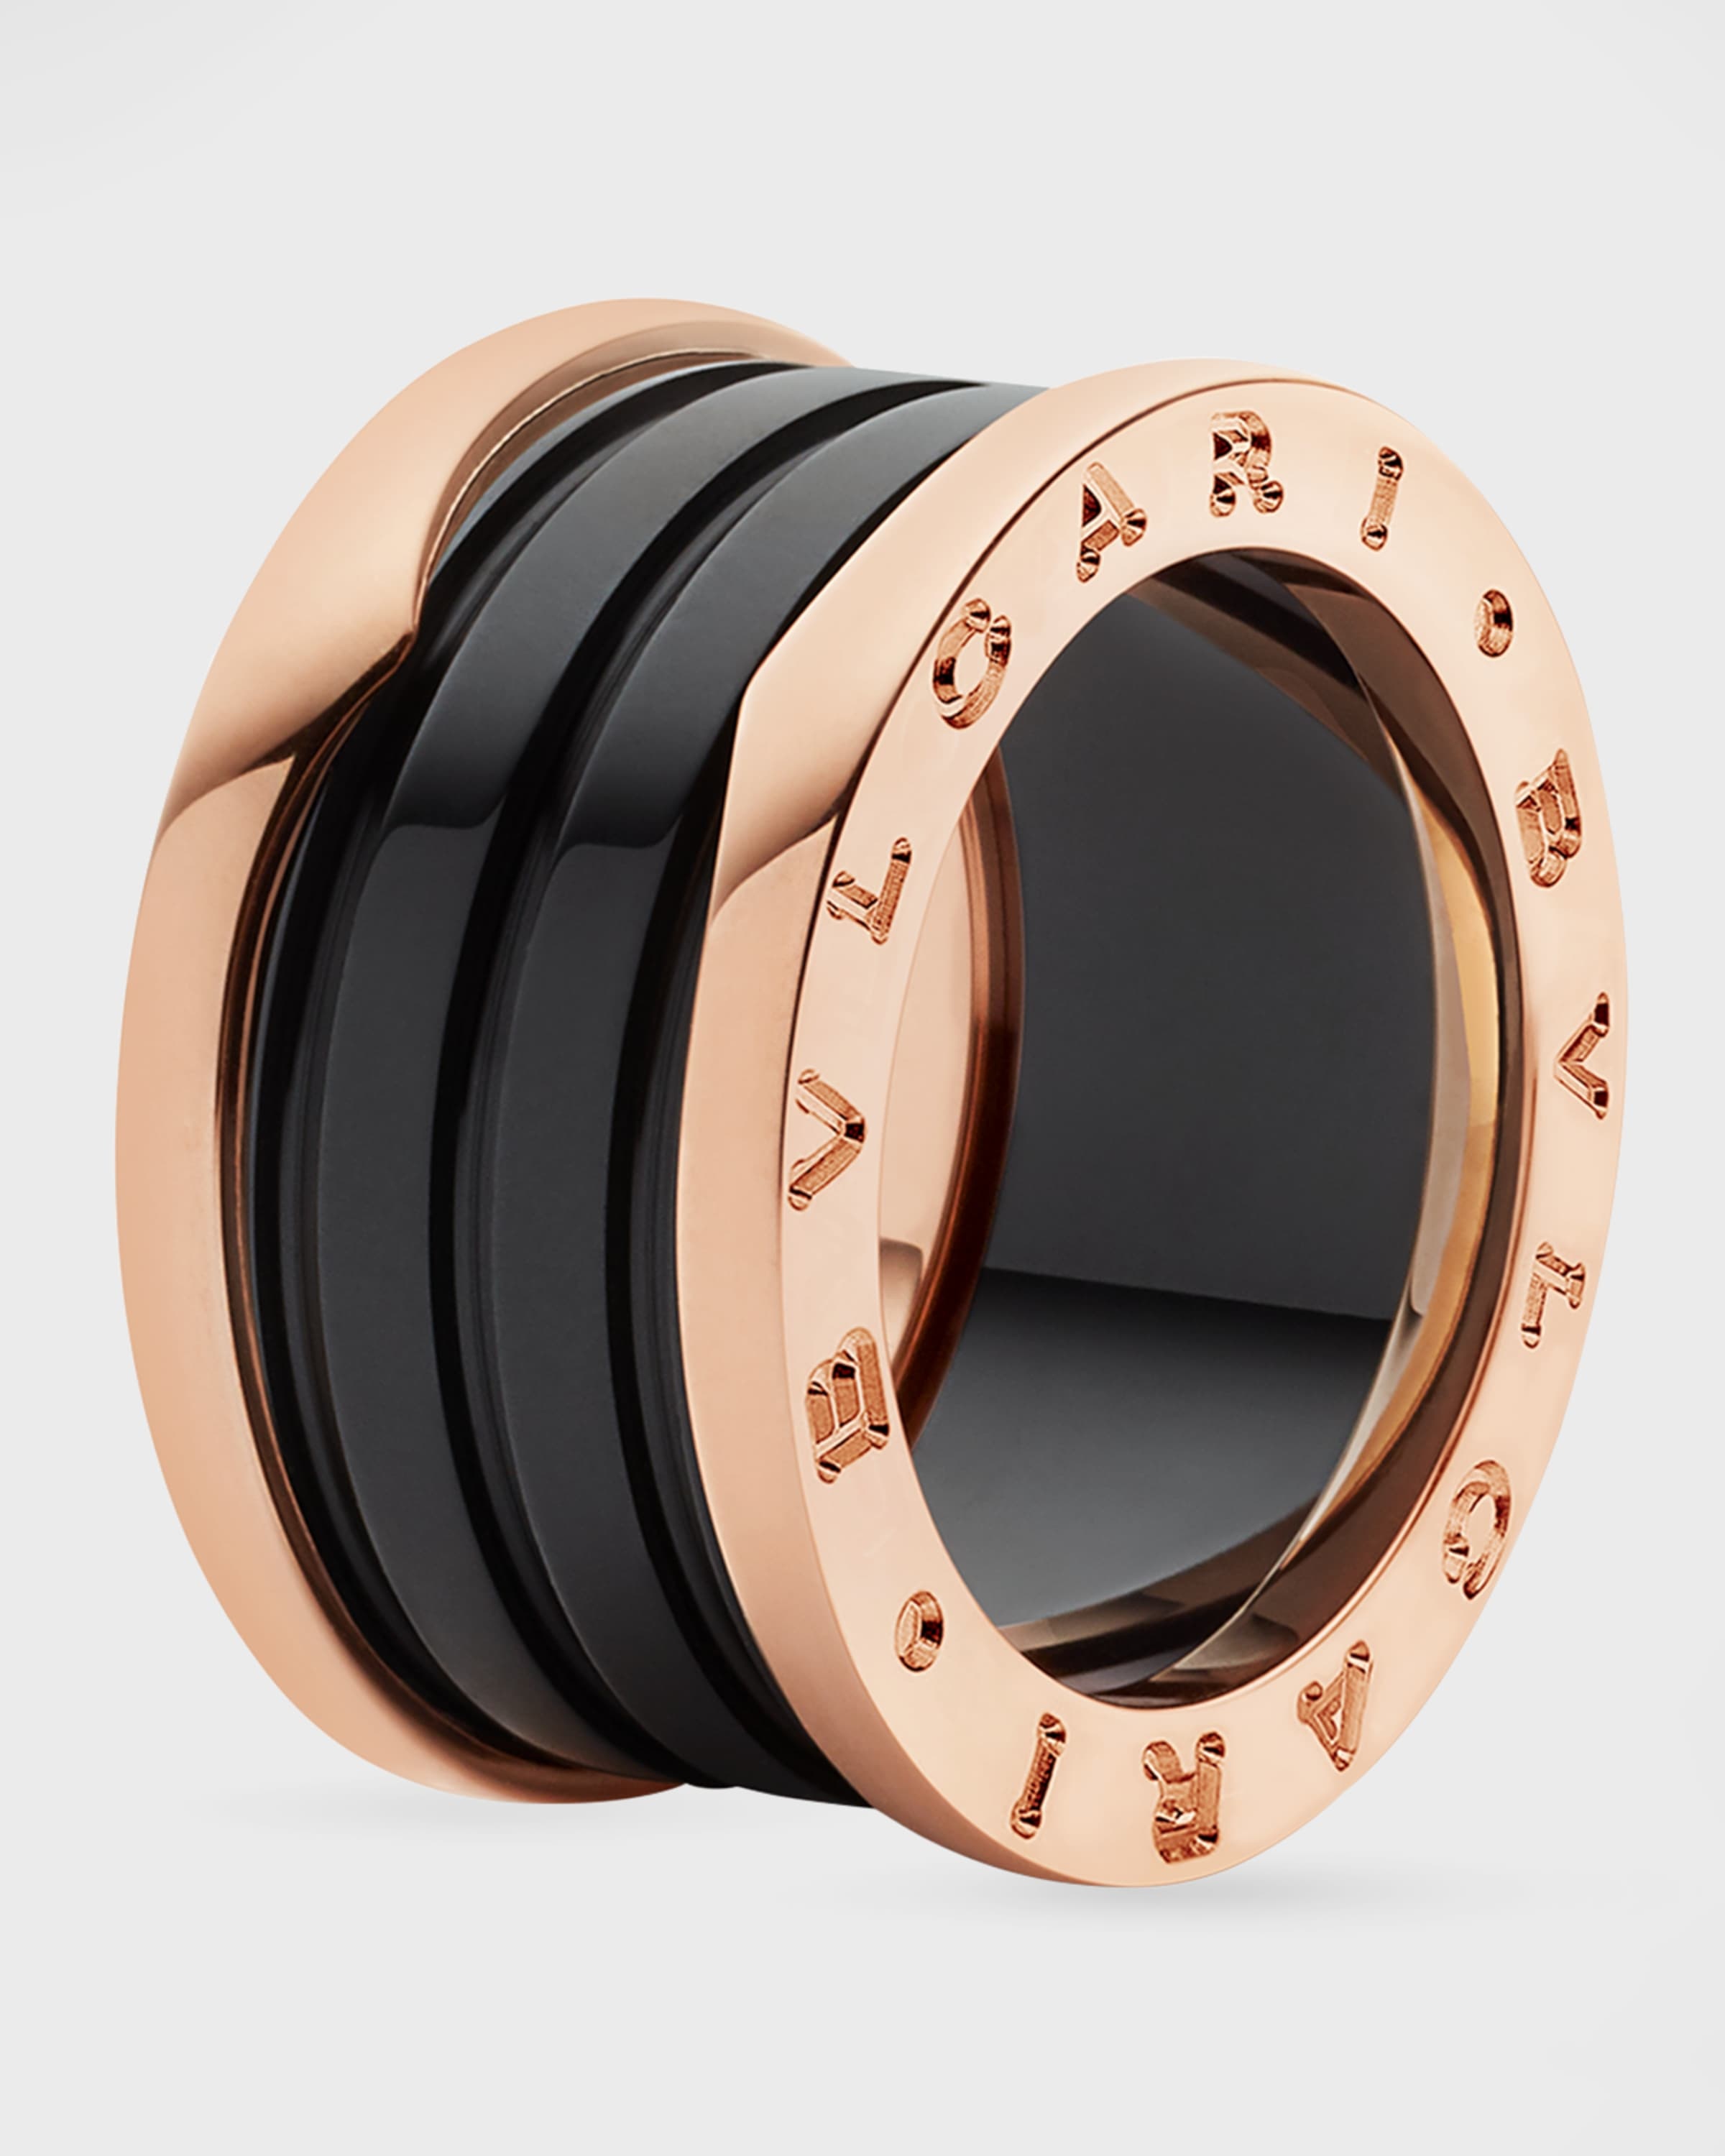 B.Zero1 Pink Gold Black Ceramic Ring, EU 52 / US 6 - 1